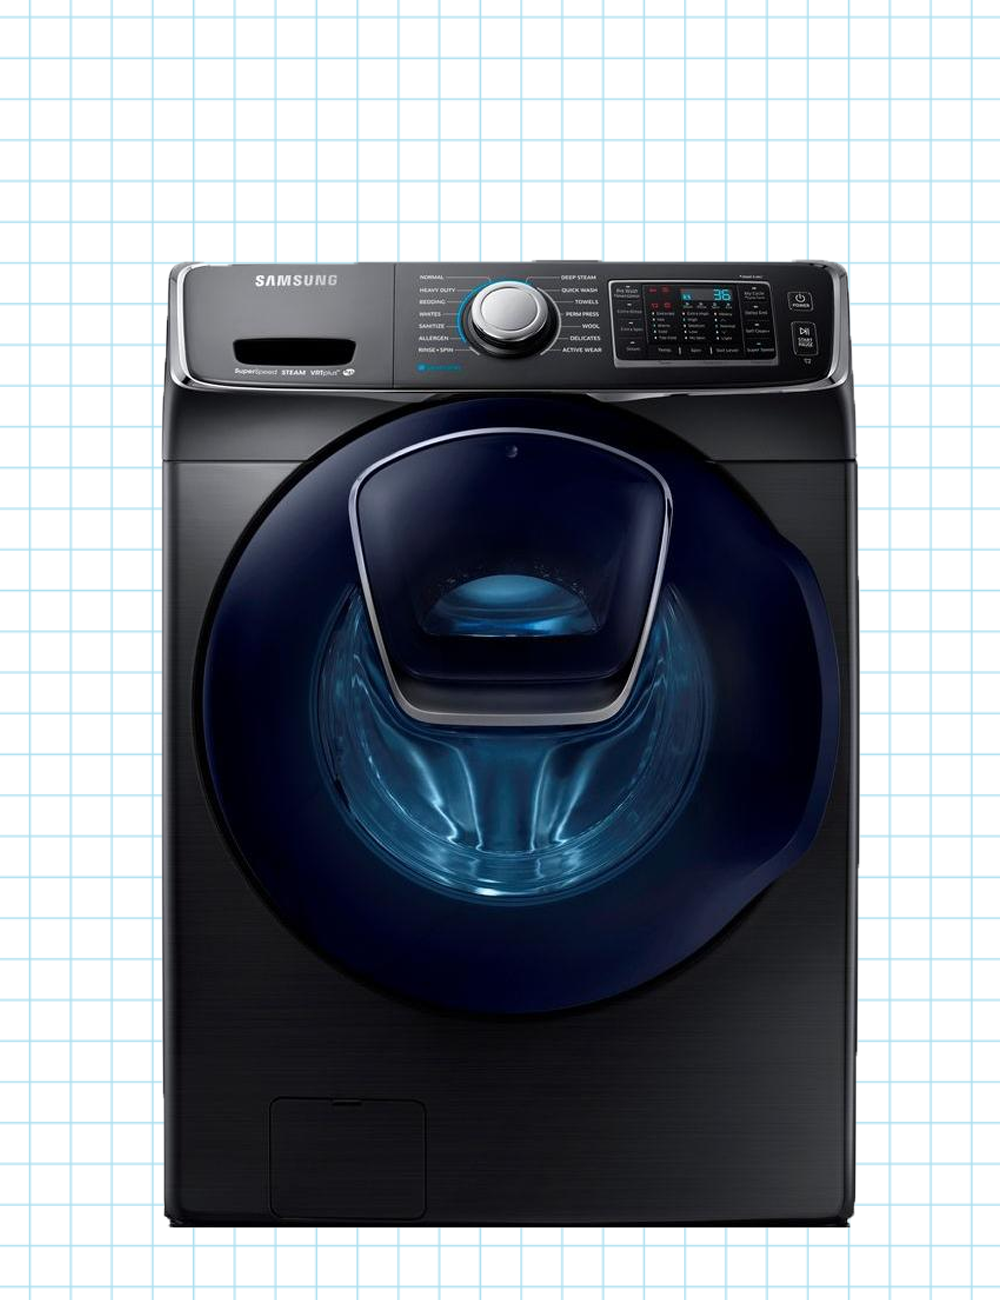 Washing Machine Comparison Chart